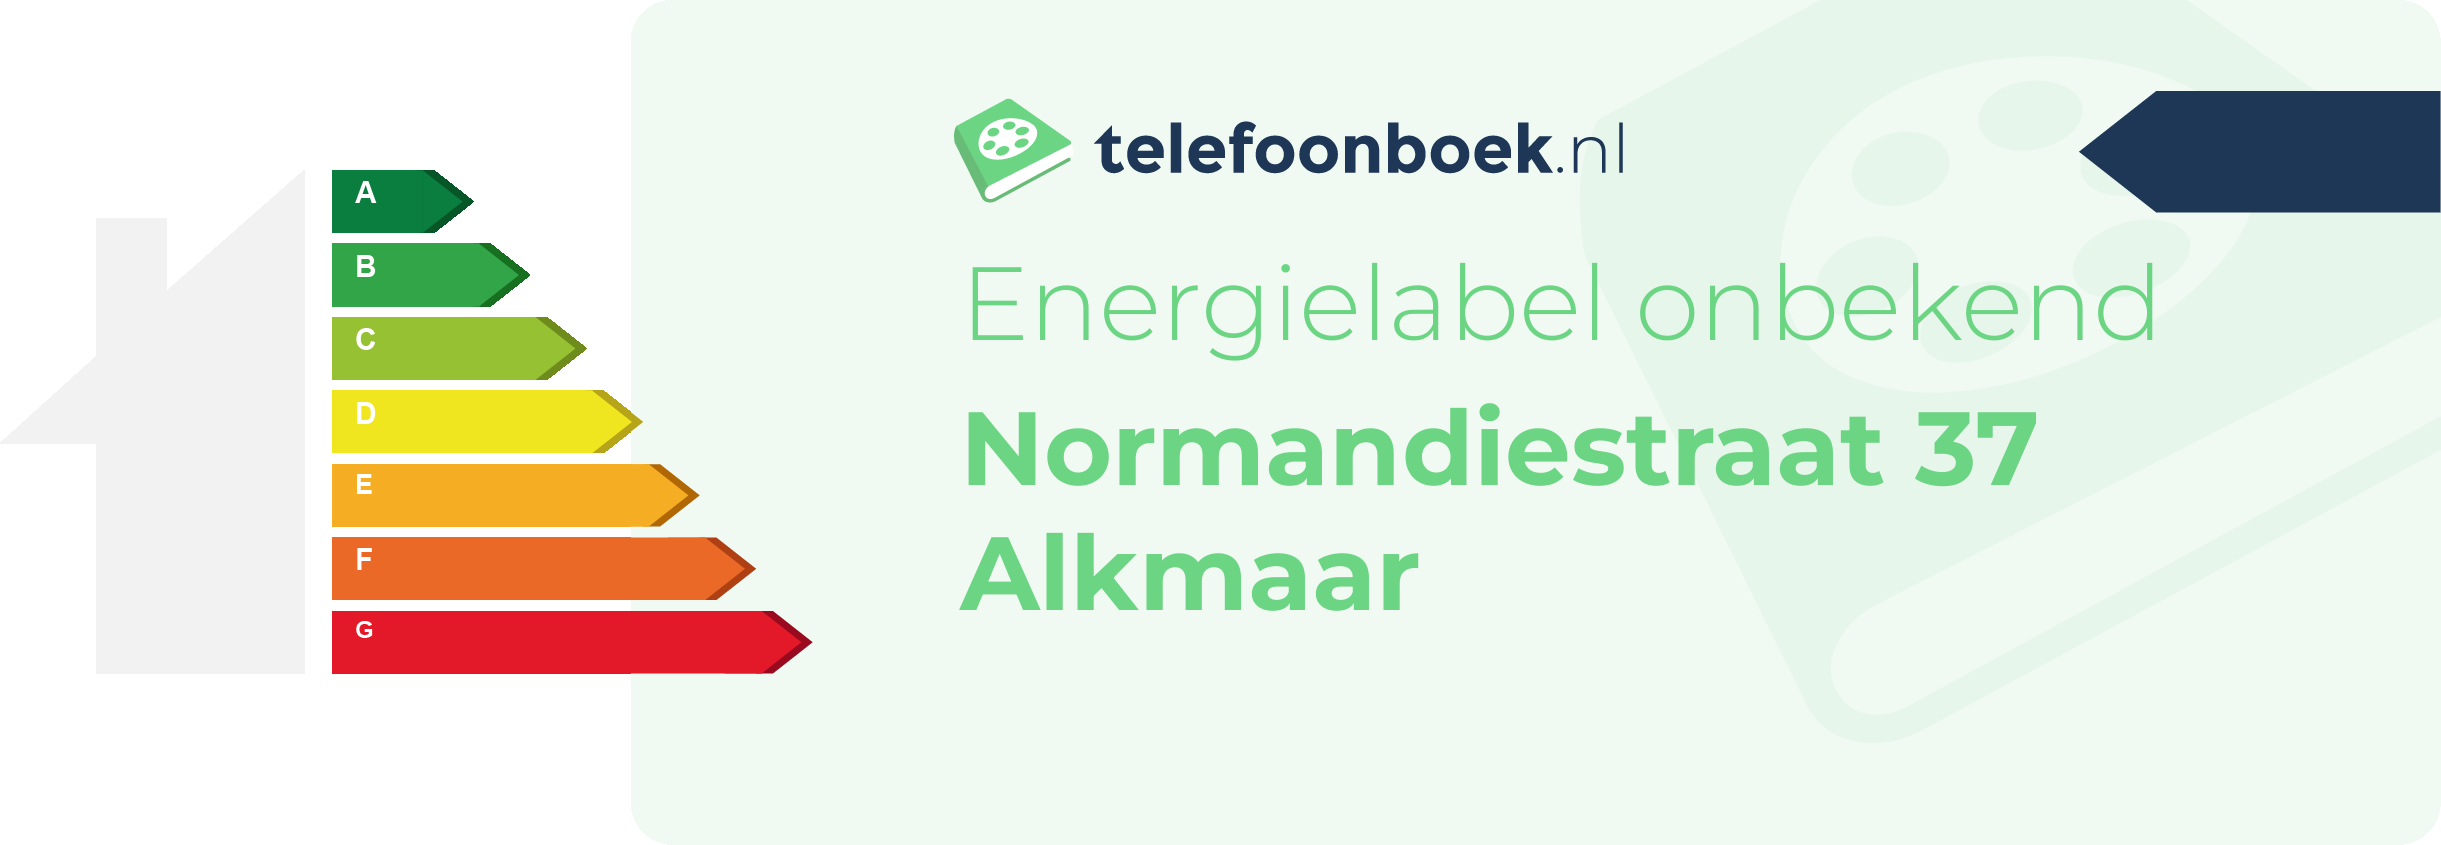 Energielabel Normandiestraat 37 Alkmaar